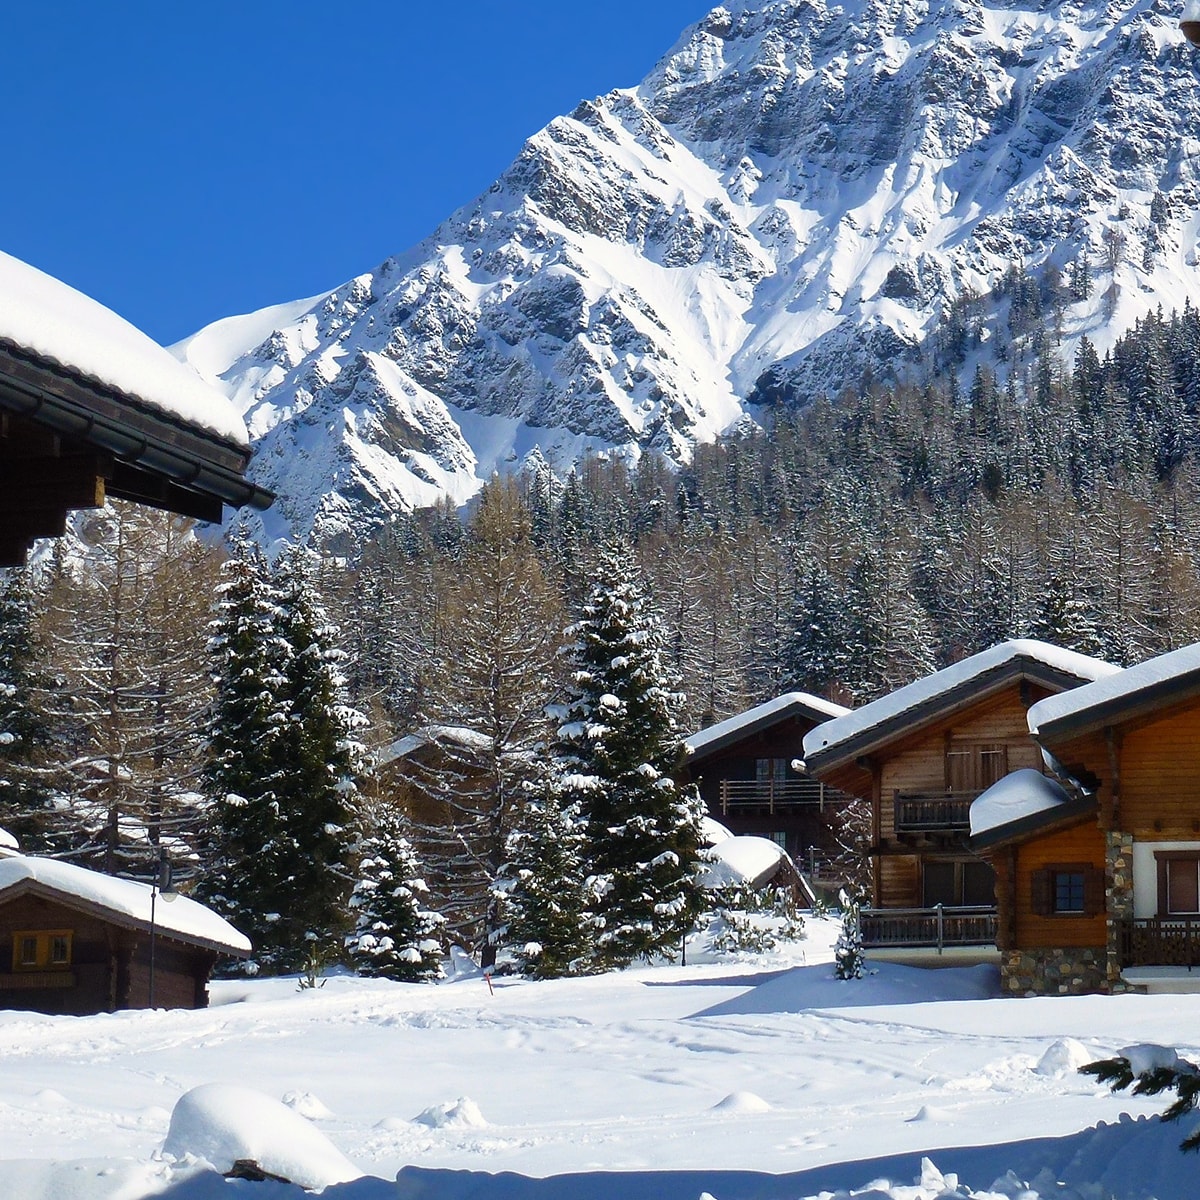 Skiing Villars, Leysin & Les Diablerets Switzerland - Ski resort